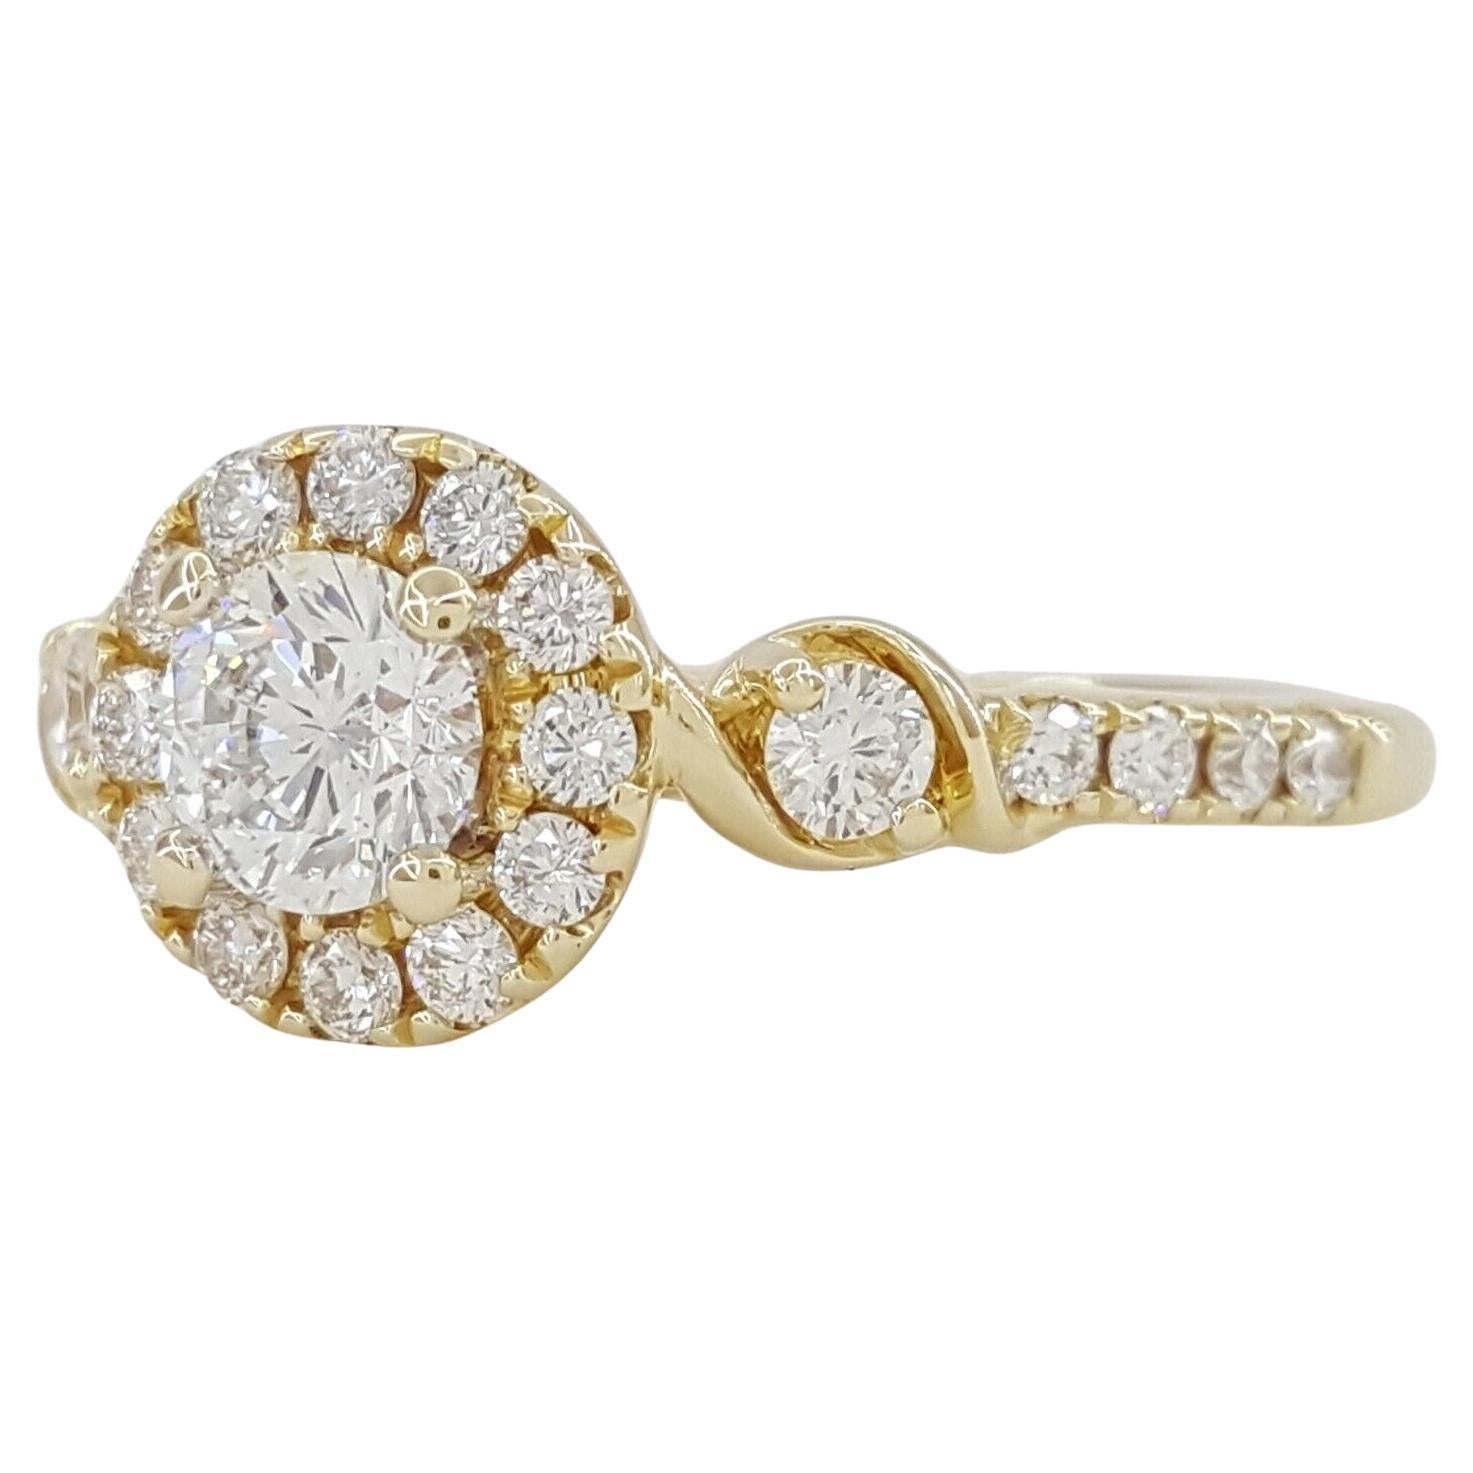 Contemporary Leo Round Cut Diamond Engagement Ring